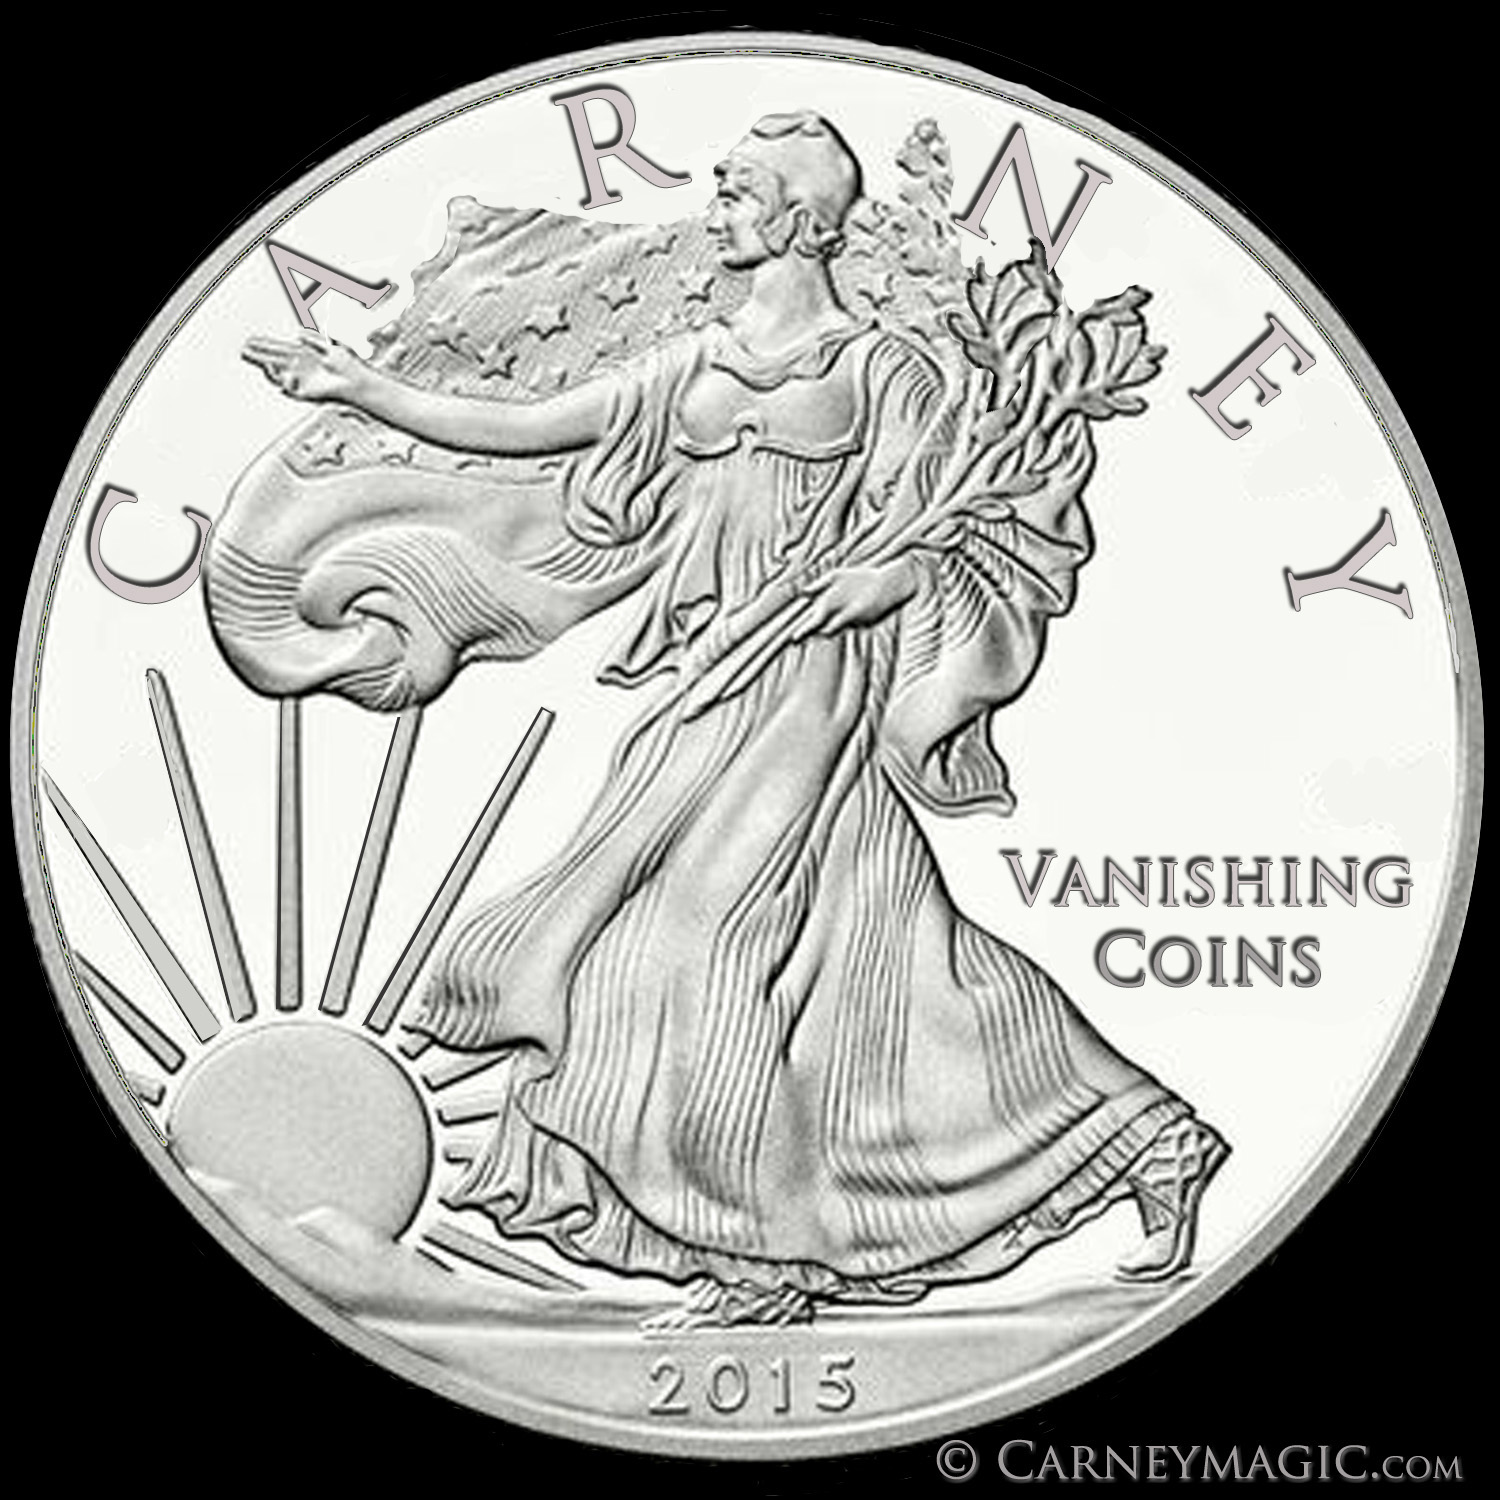 Vanishing Coins by John Carney